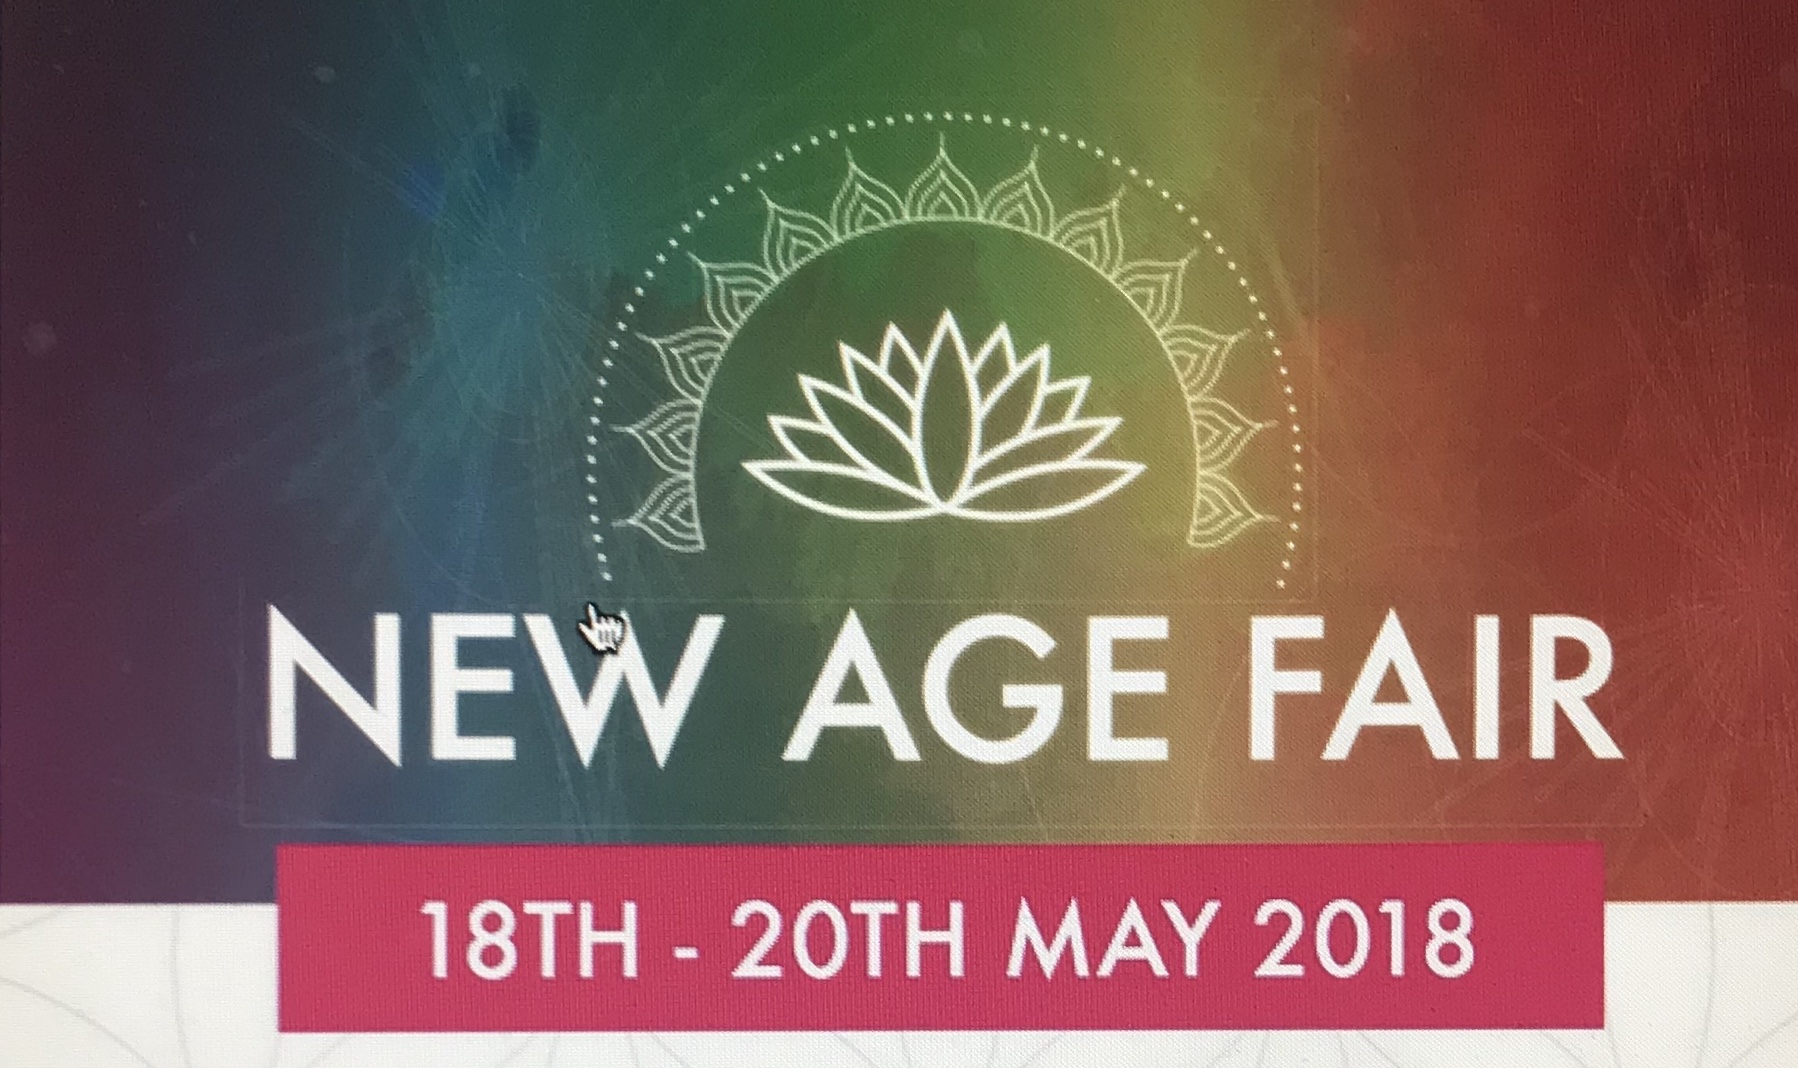 New Age Festival